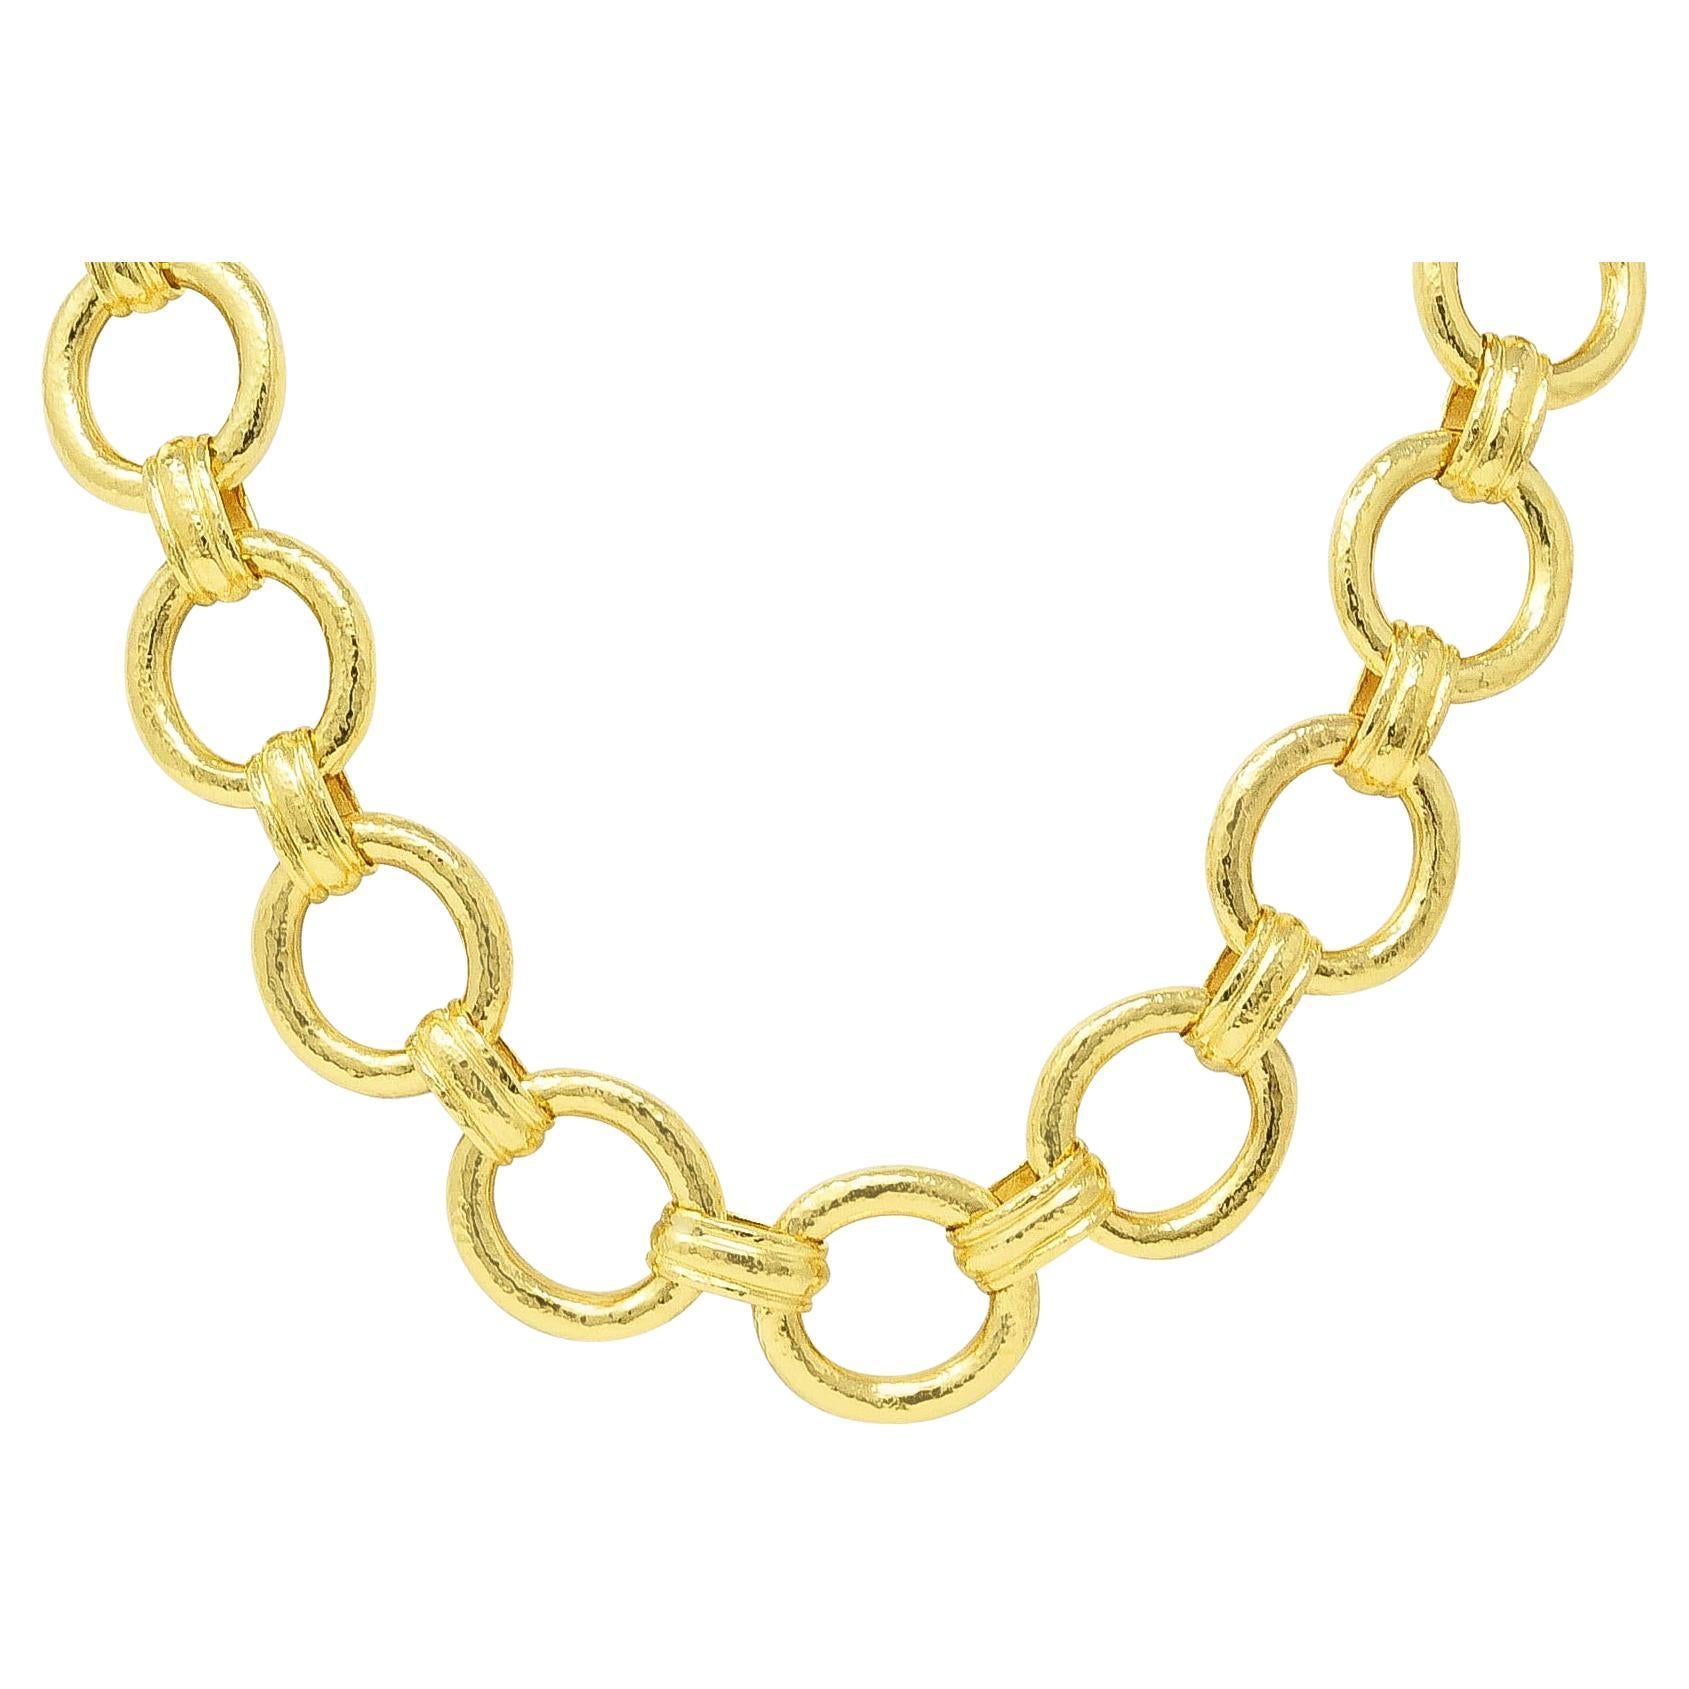 Elizabeth Locke Contemporary Ruby 19 Karat Gold Hammered Link Farnese Necklace